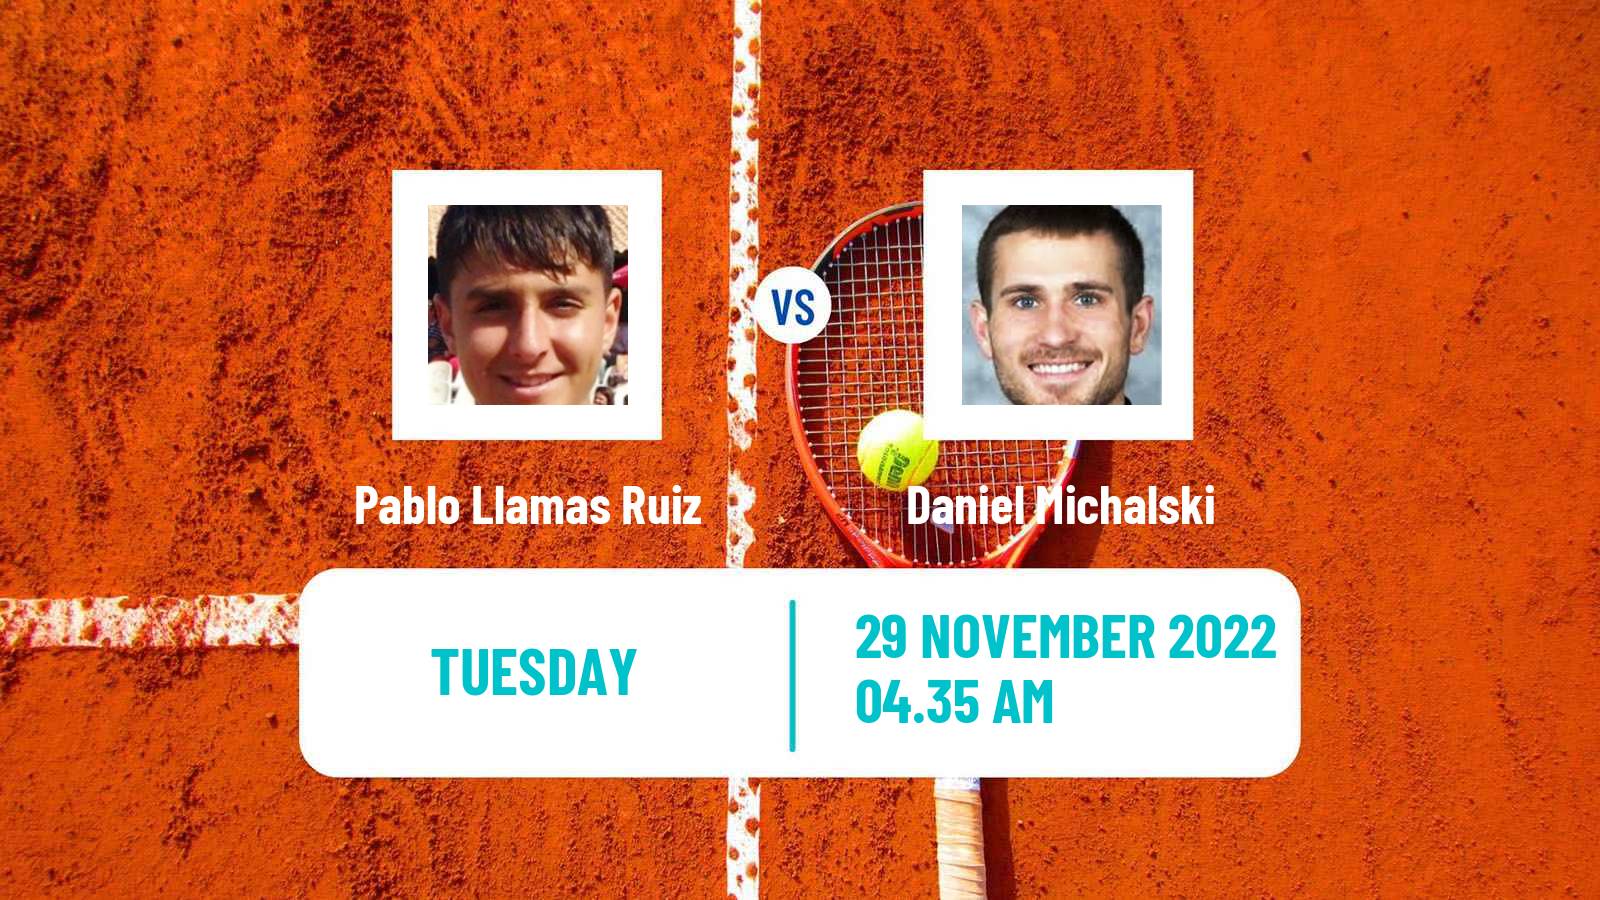 Tennis ATP Challenger Pablo Llamas Ruiz - Daniel Michalski